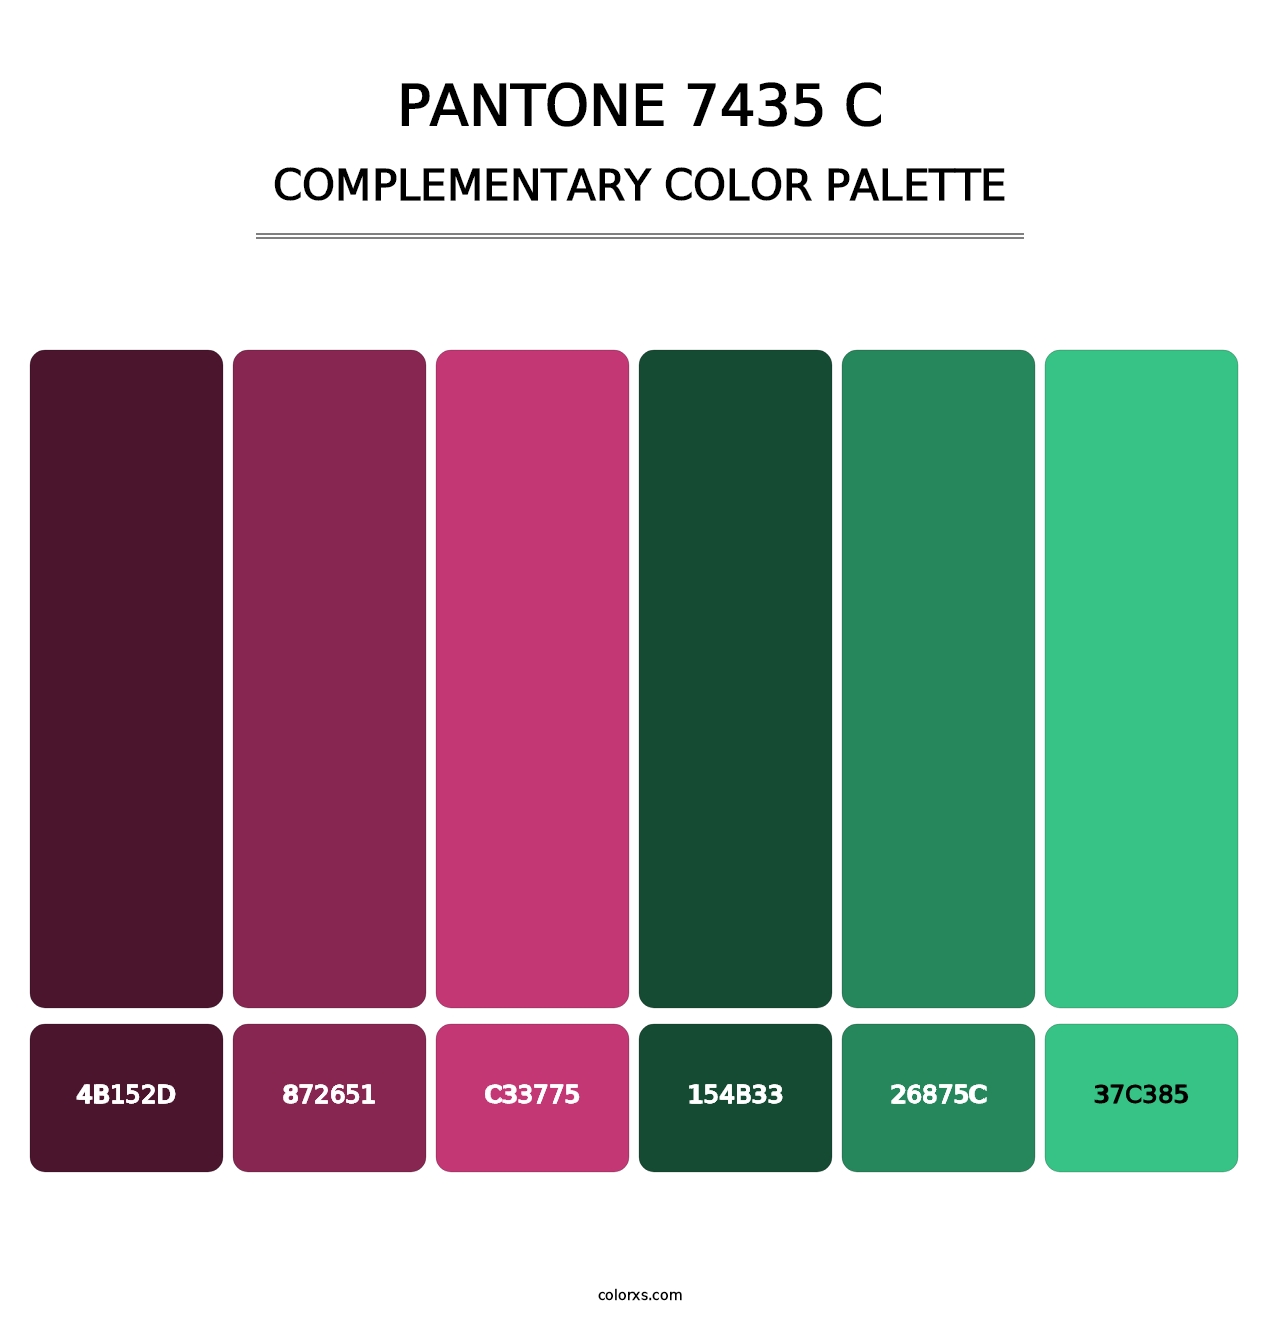 PANTONE 7435 C - Complementary Color Palette